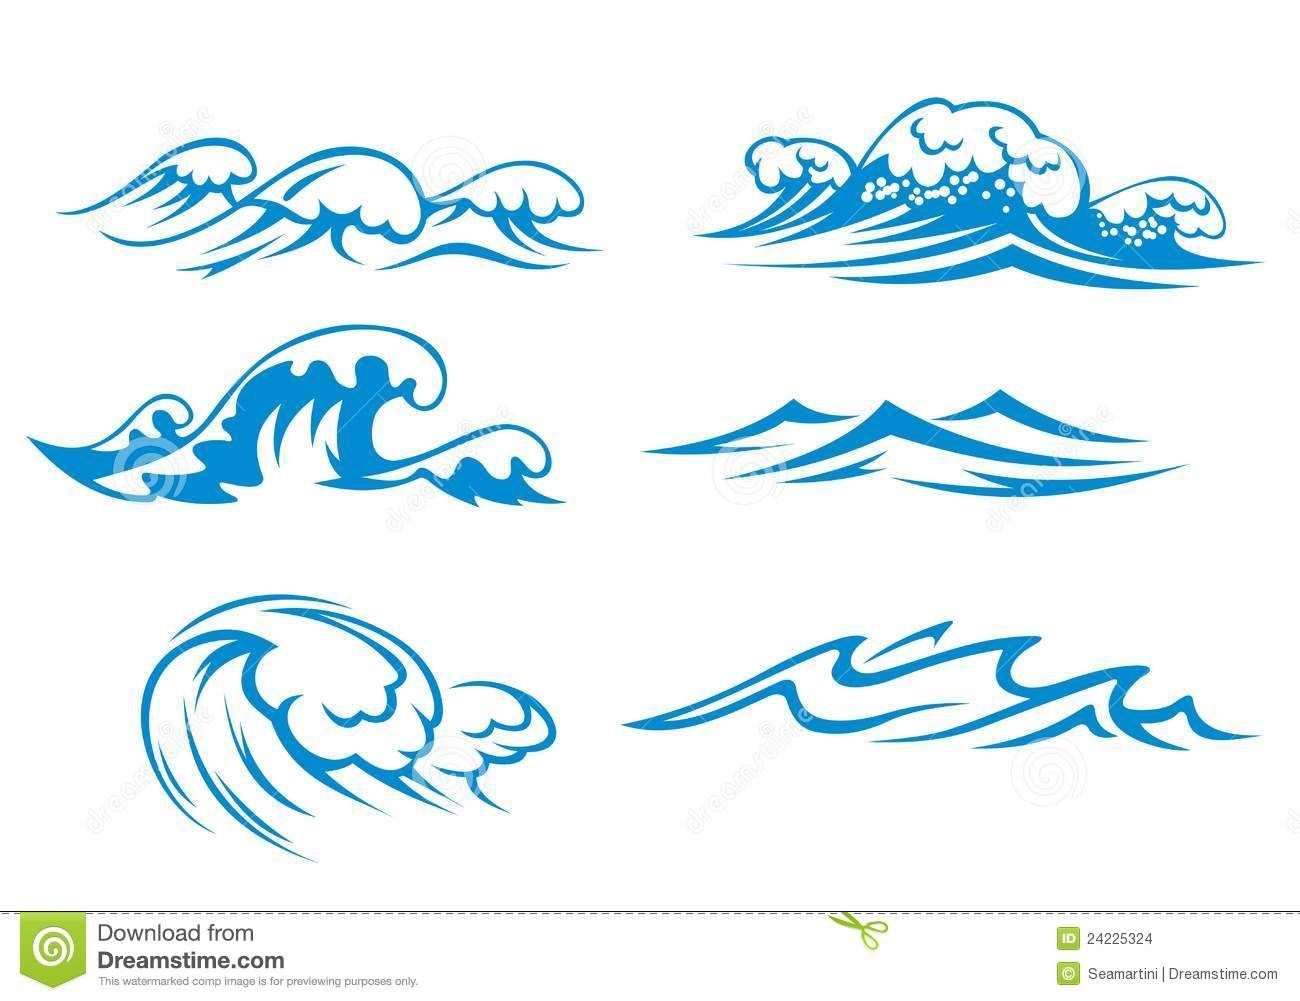 Waves silhouette google.